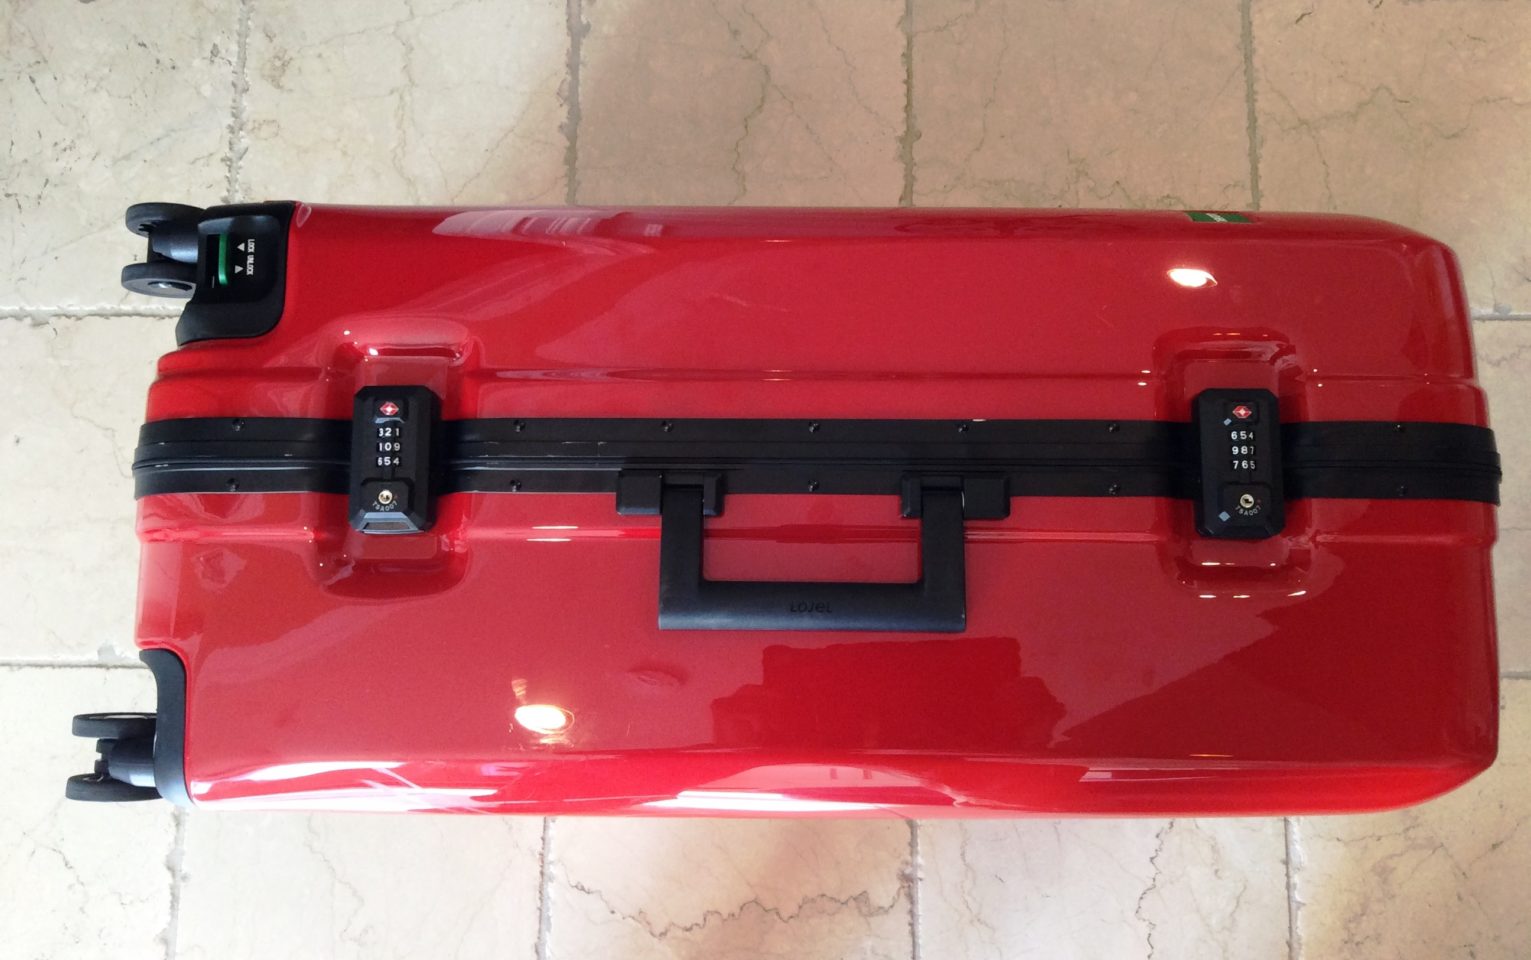 Lojel Luggage ~ Two TSA combination locks on the Novigo suitcase